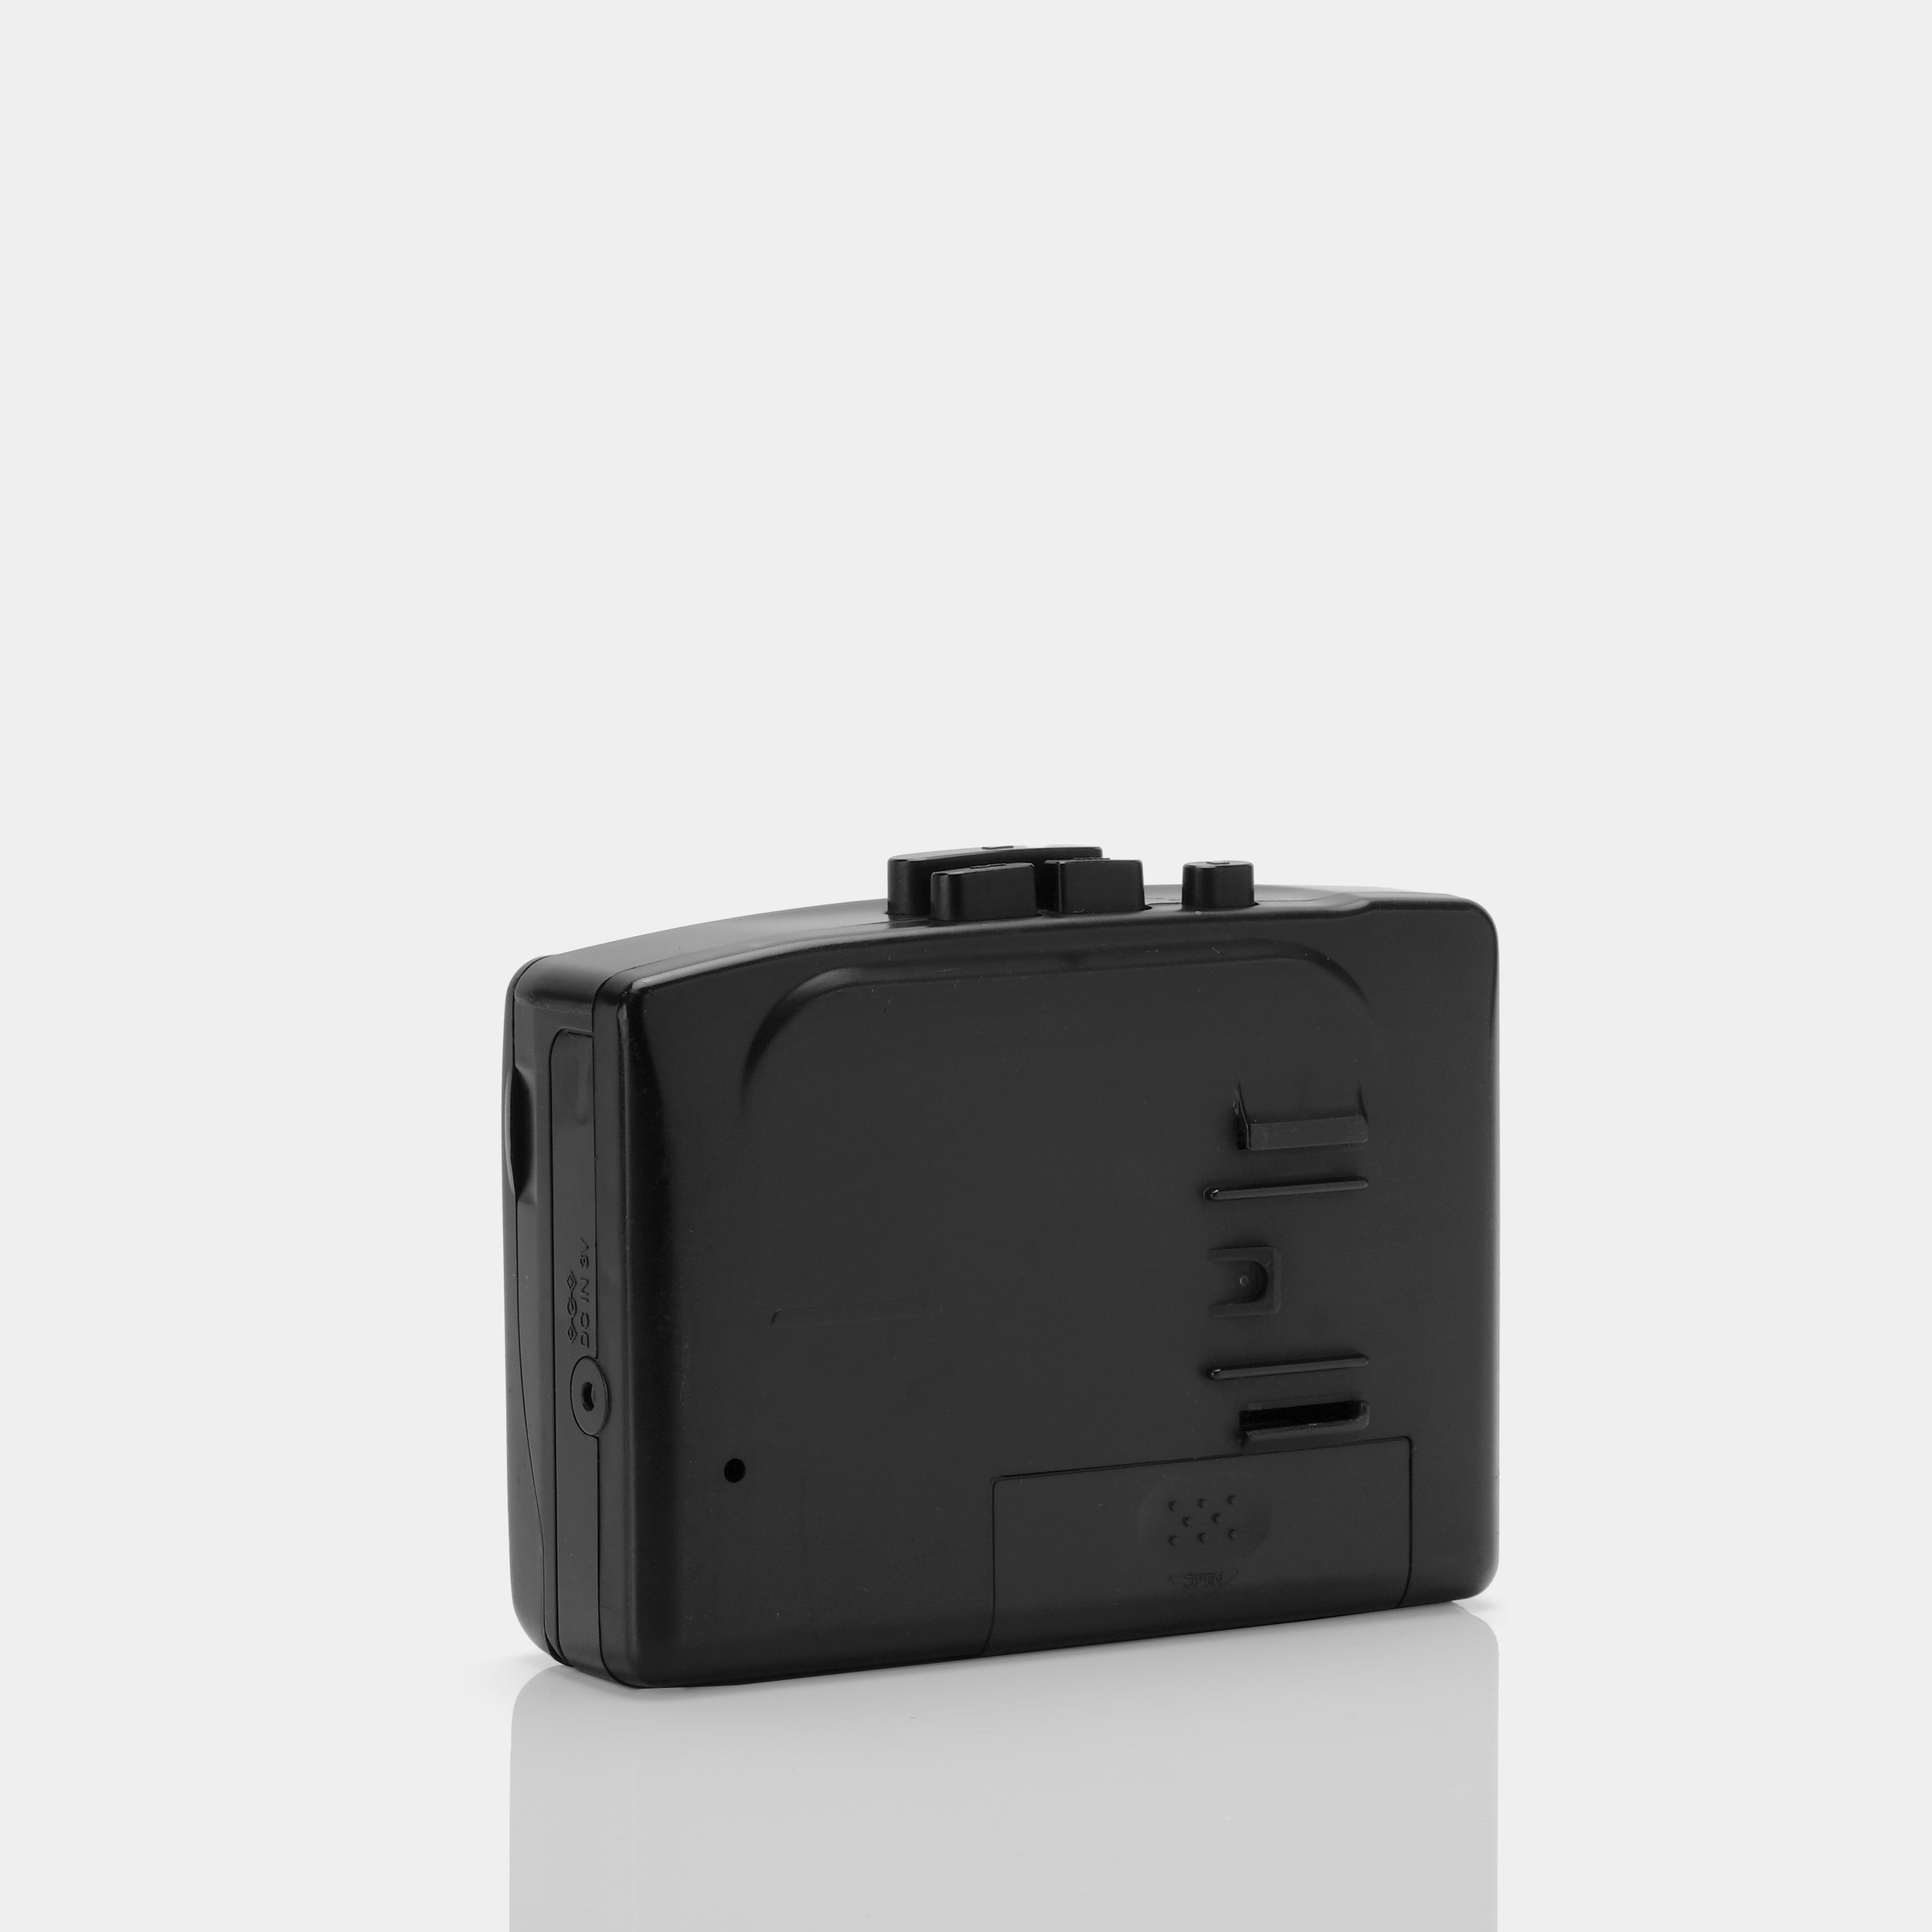 Sony Walkman WM-FX28 AM/FM Portable Cassette Player (B-Grade)